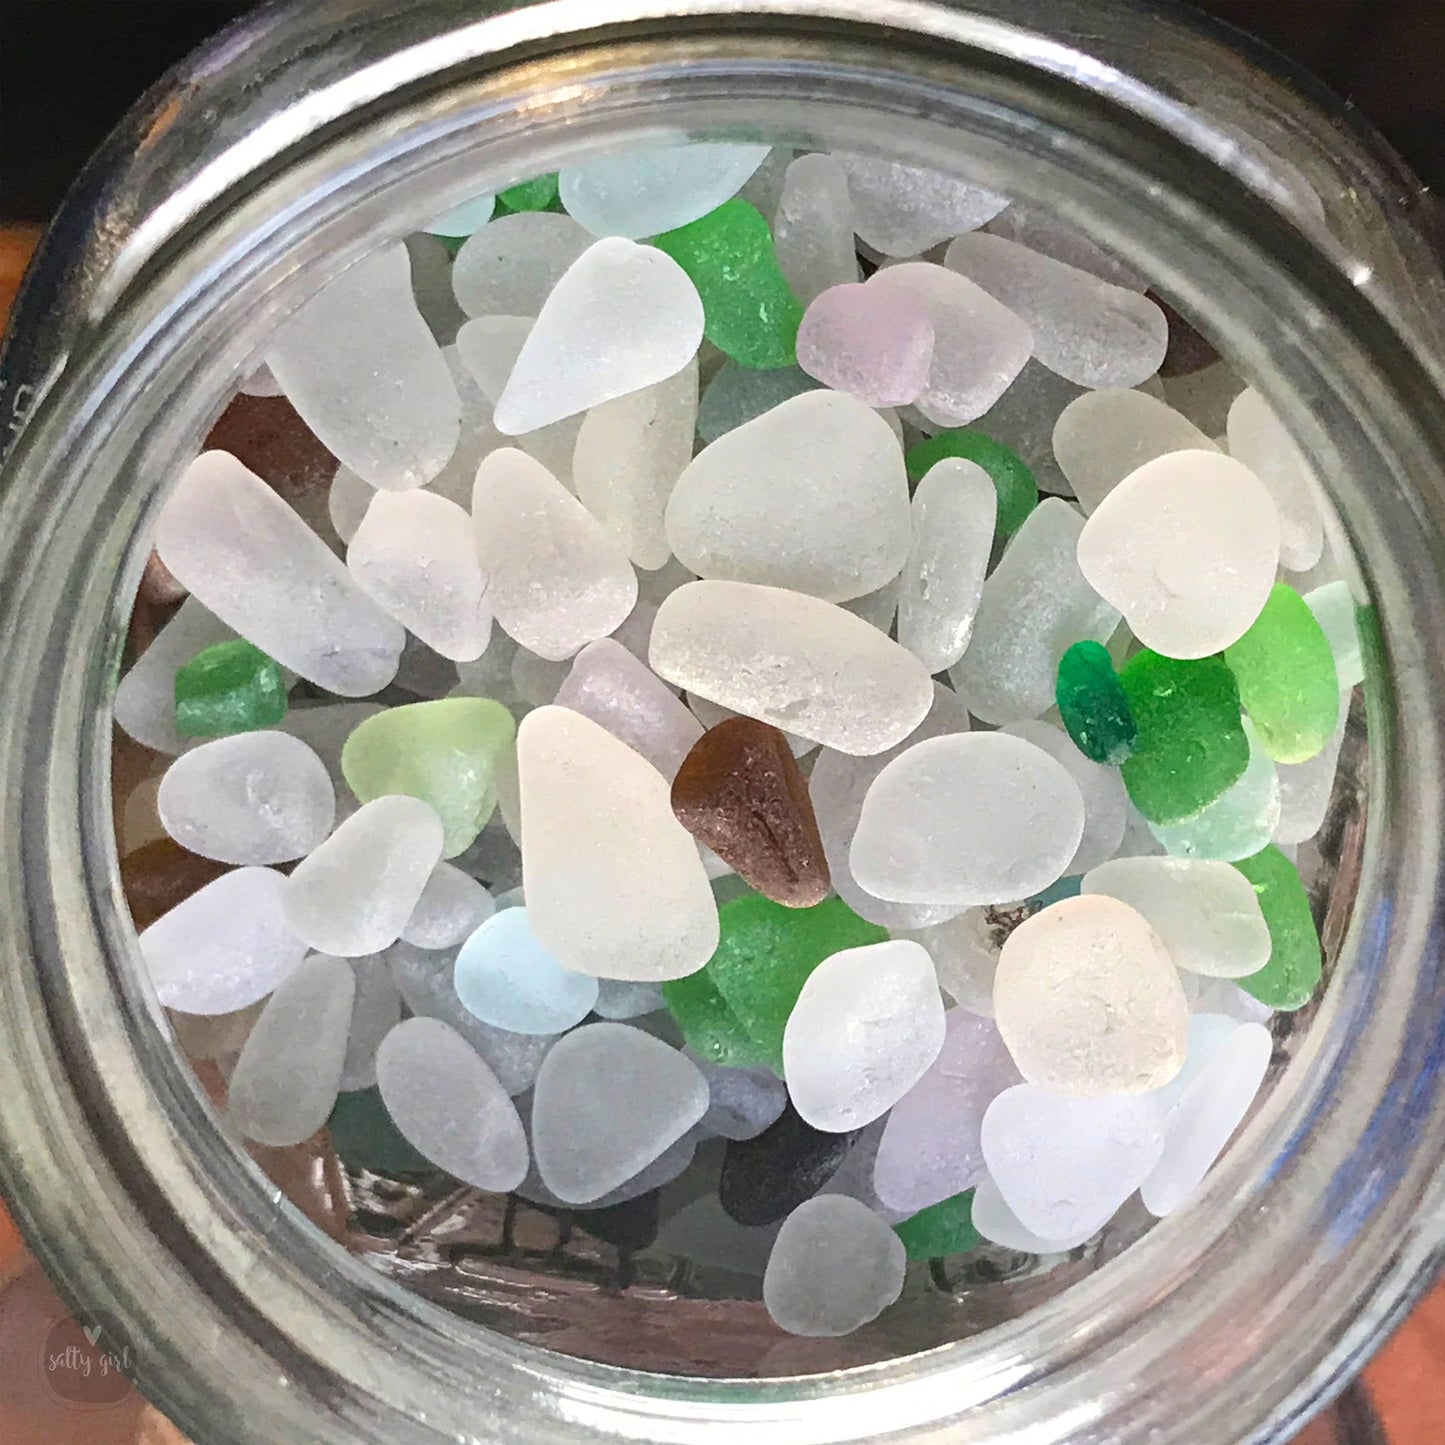 Sea Glass Teardrops - Tiny Mermaid Tears in a Mini Glass Jar - Genuine Sea Glass from Maine